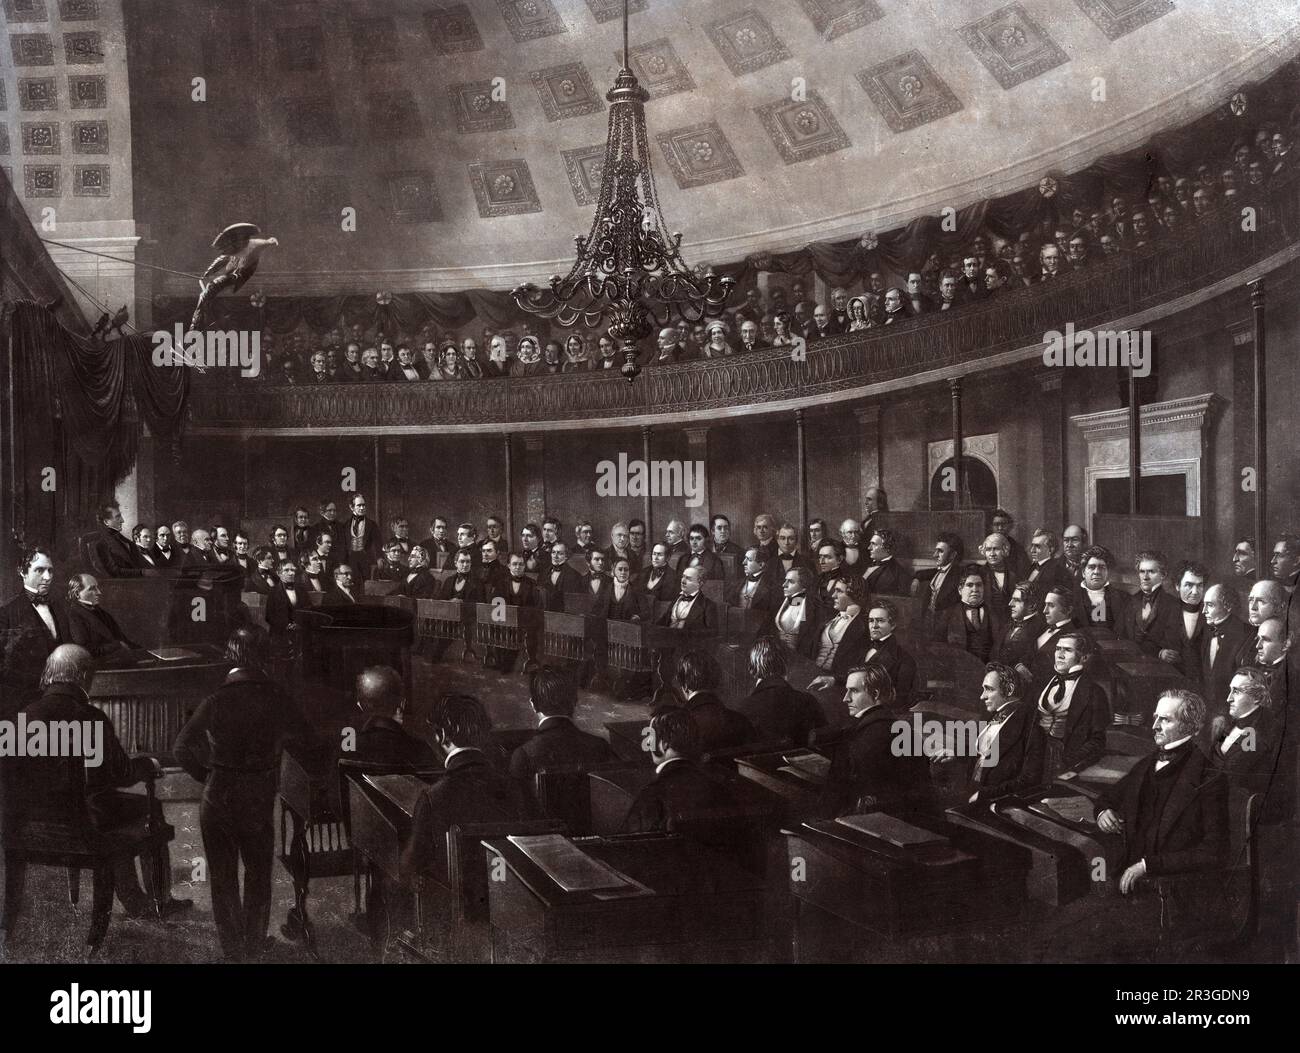 Vintage print of the United States Senate chamber. Stock Photo